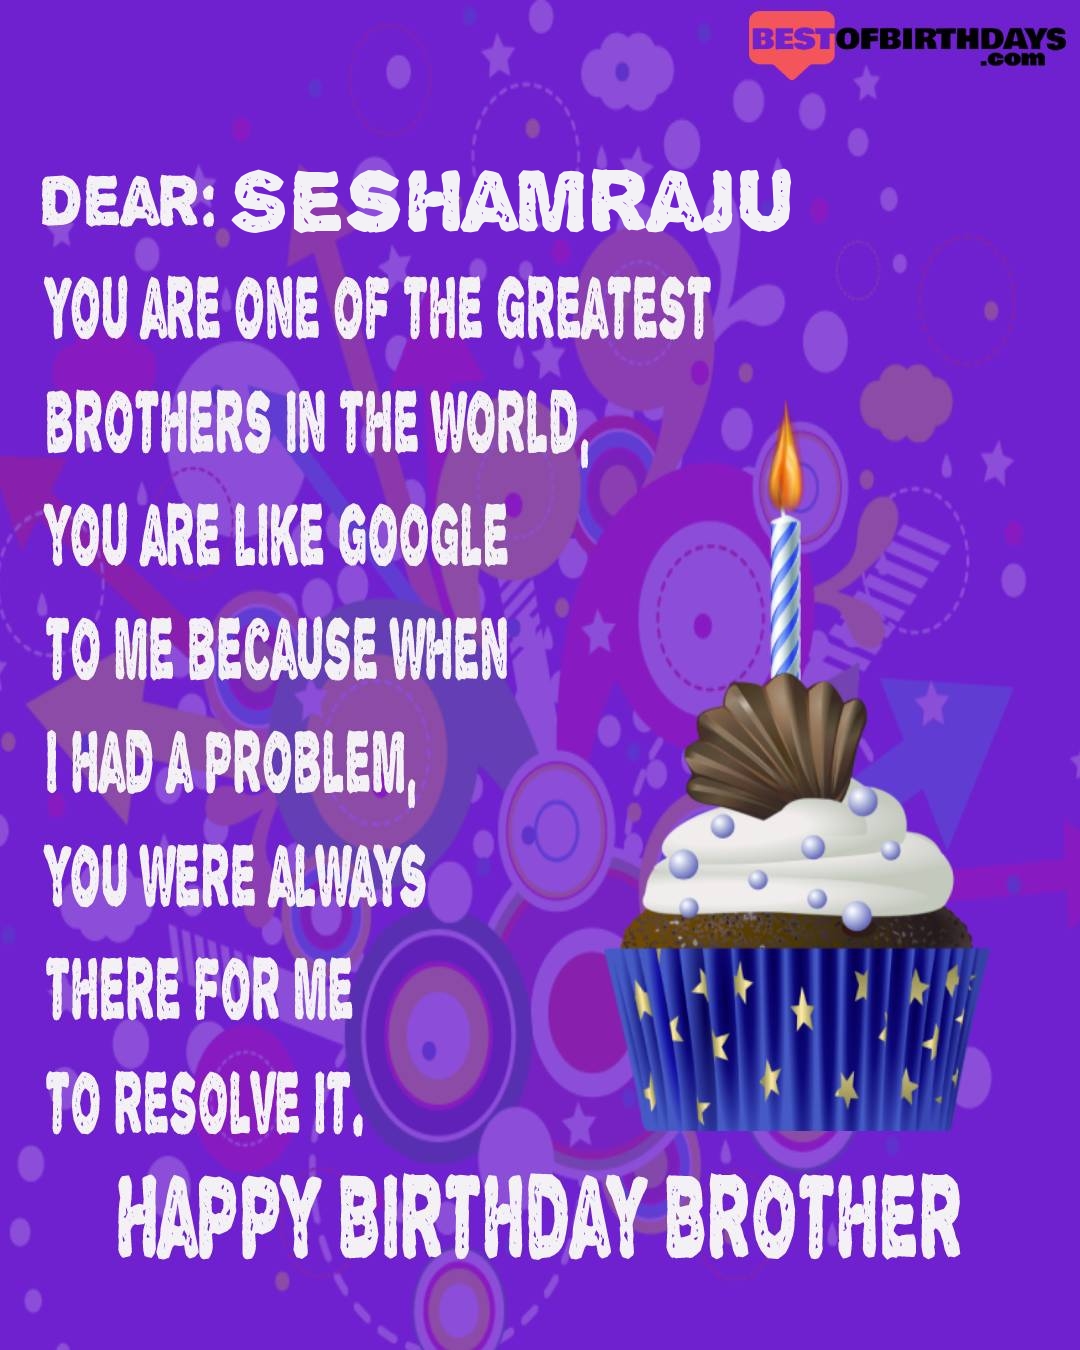 Happy birthday seshamraju bhai brother bro